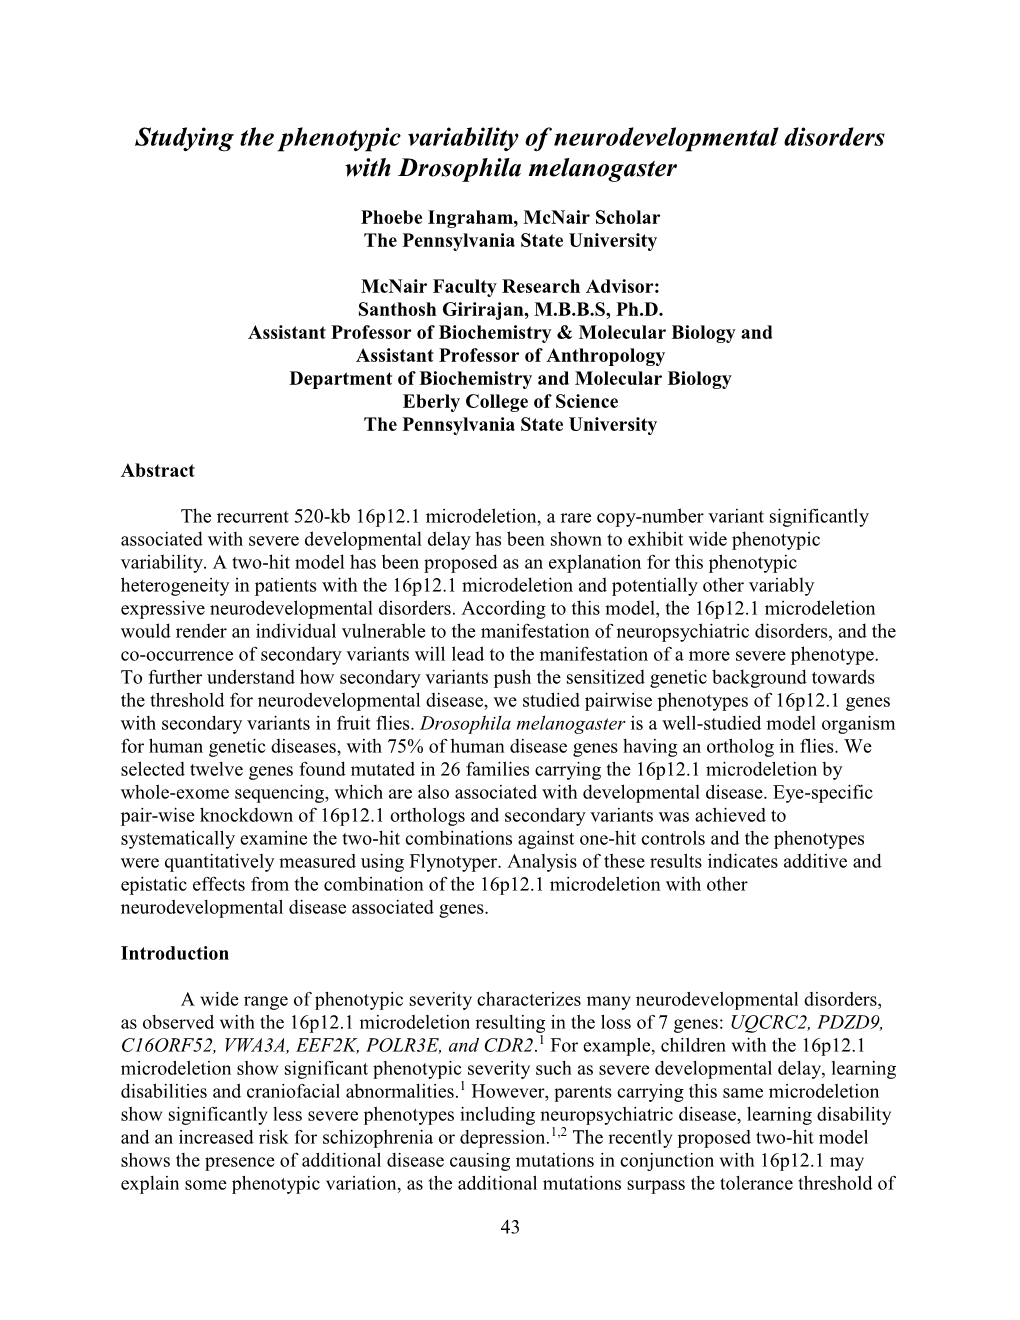 Studying the Phenotypic Variability of Neurodevelopmental Disorders with Drosophila Melanogaster